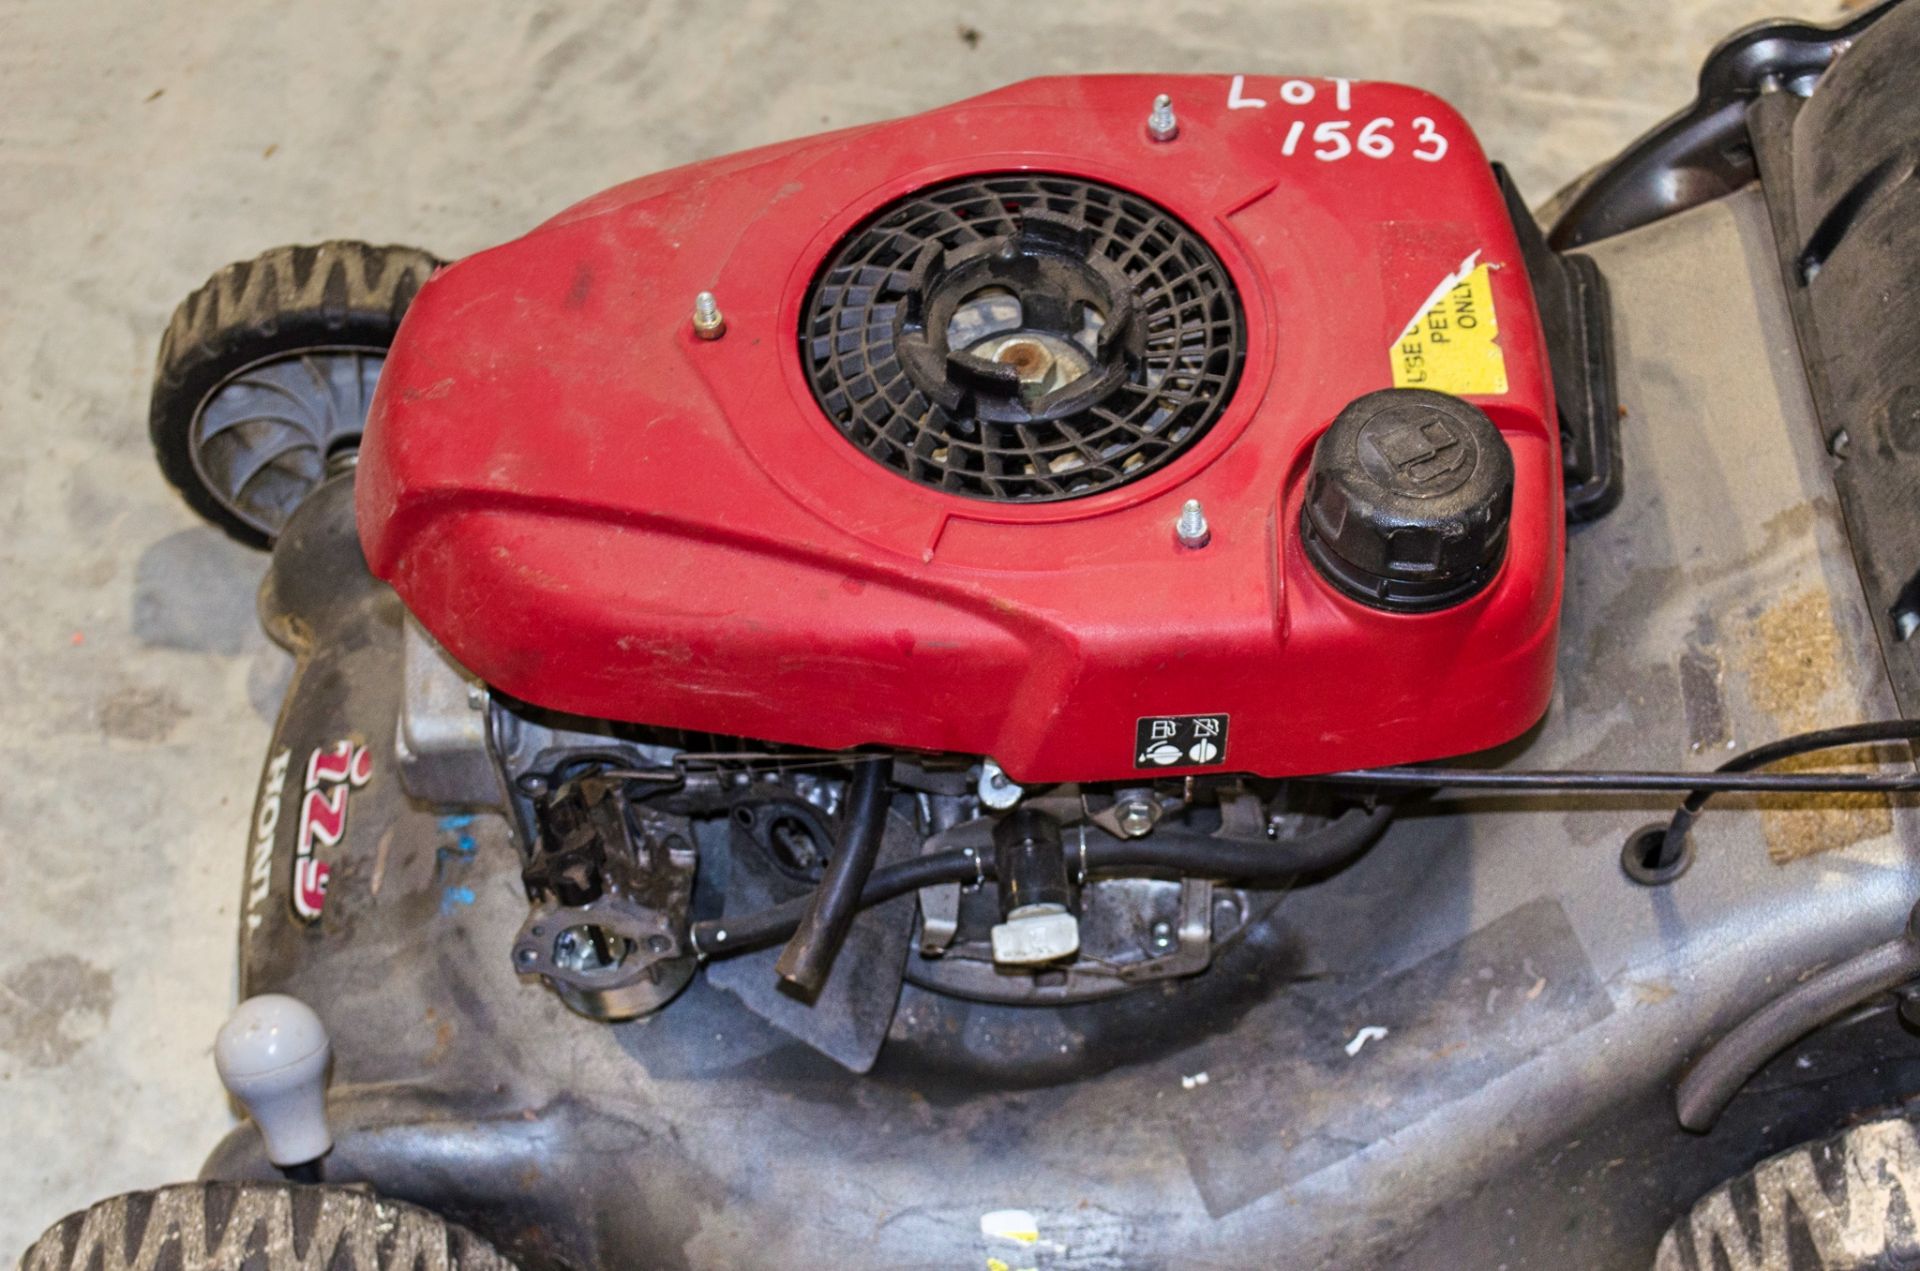 Honda Izy petrol driven lawnmower ** Parts missing ** 21490124 - Image 2 of 2